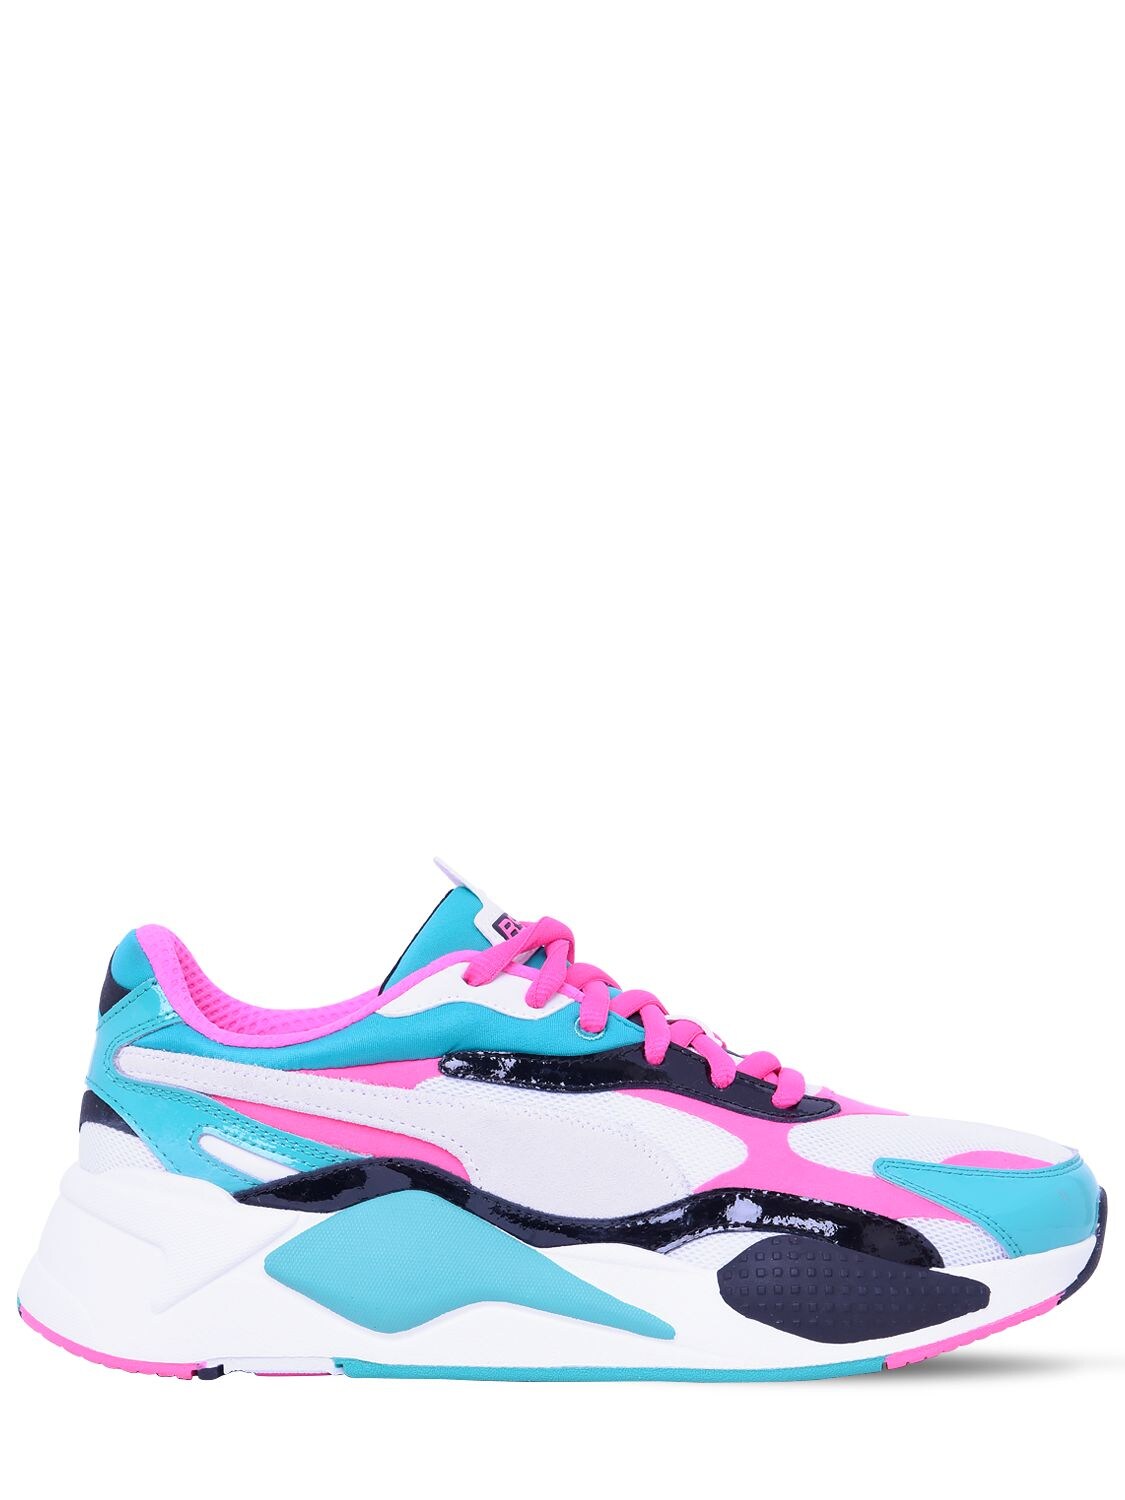 Puma Rs - X3 Plastic Sneakers In Fluo Pink,aqua